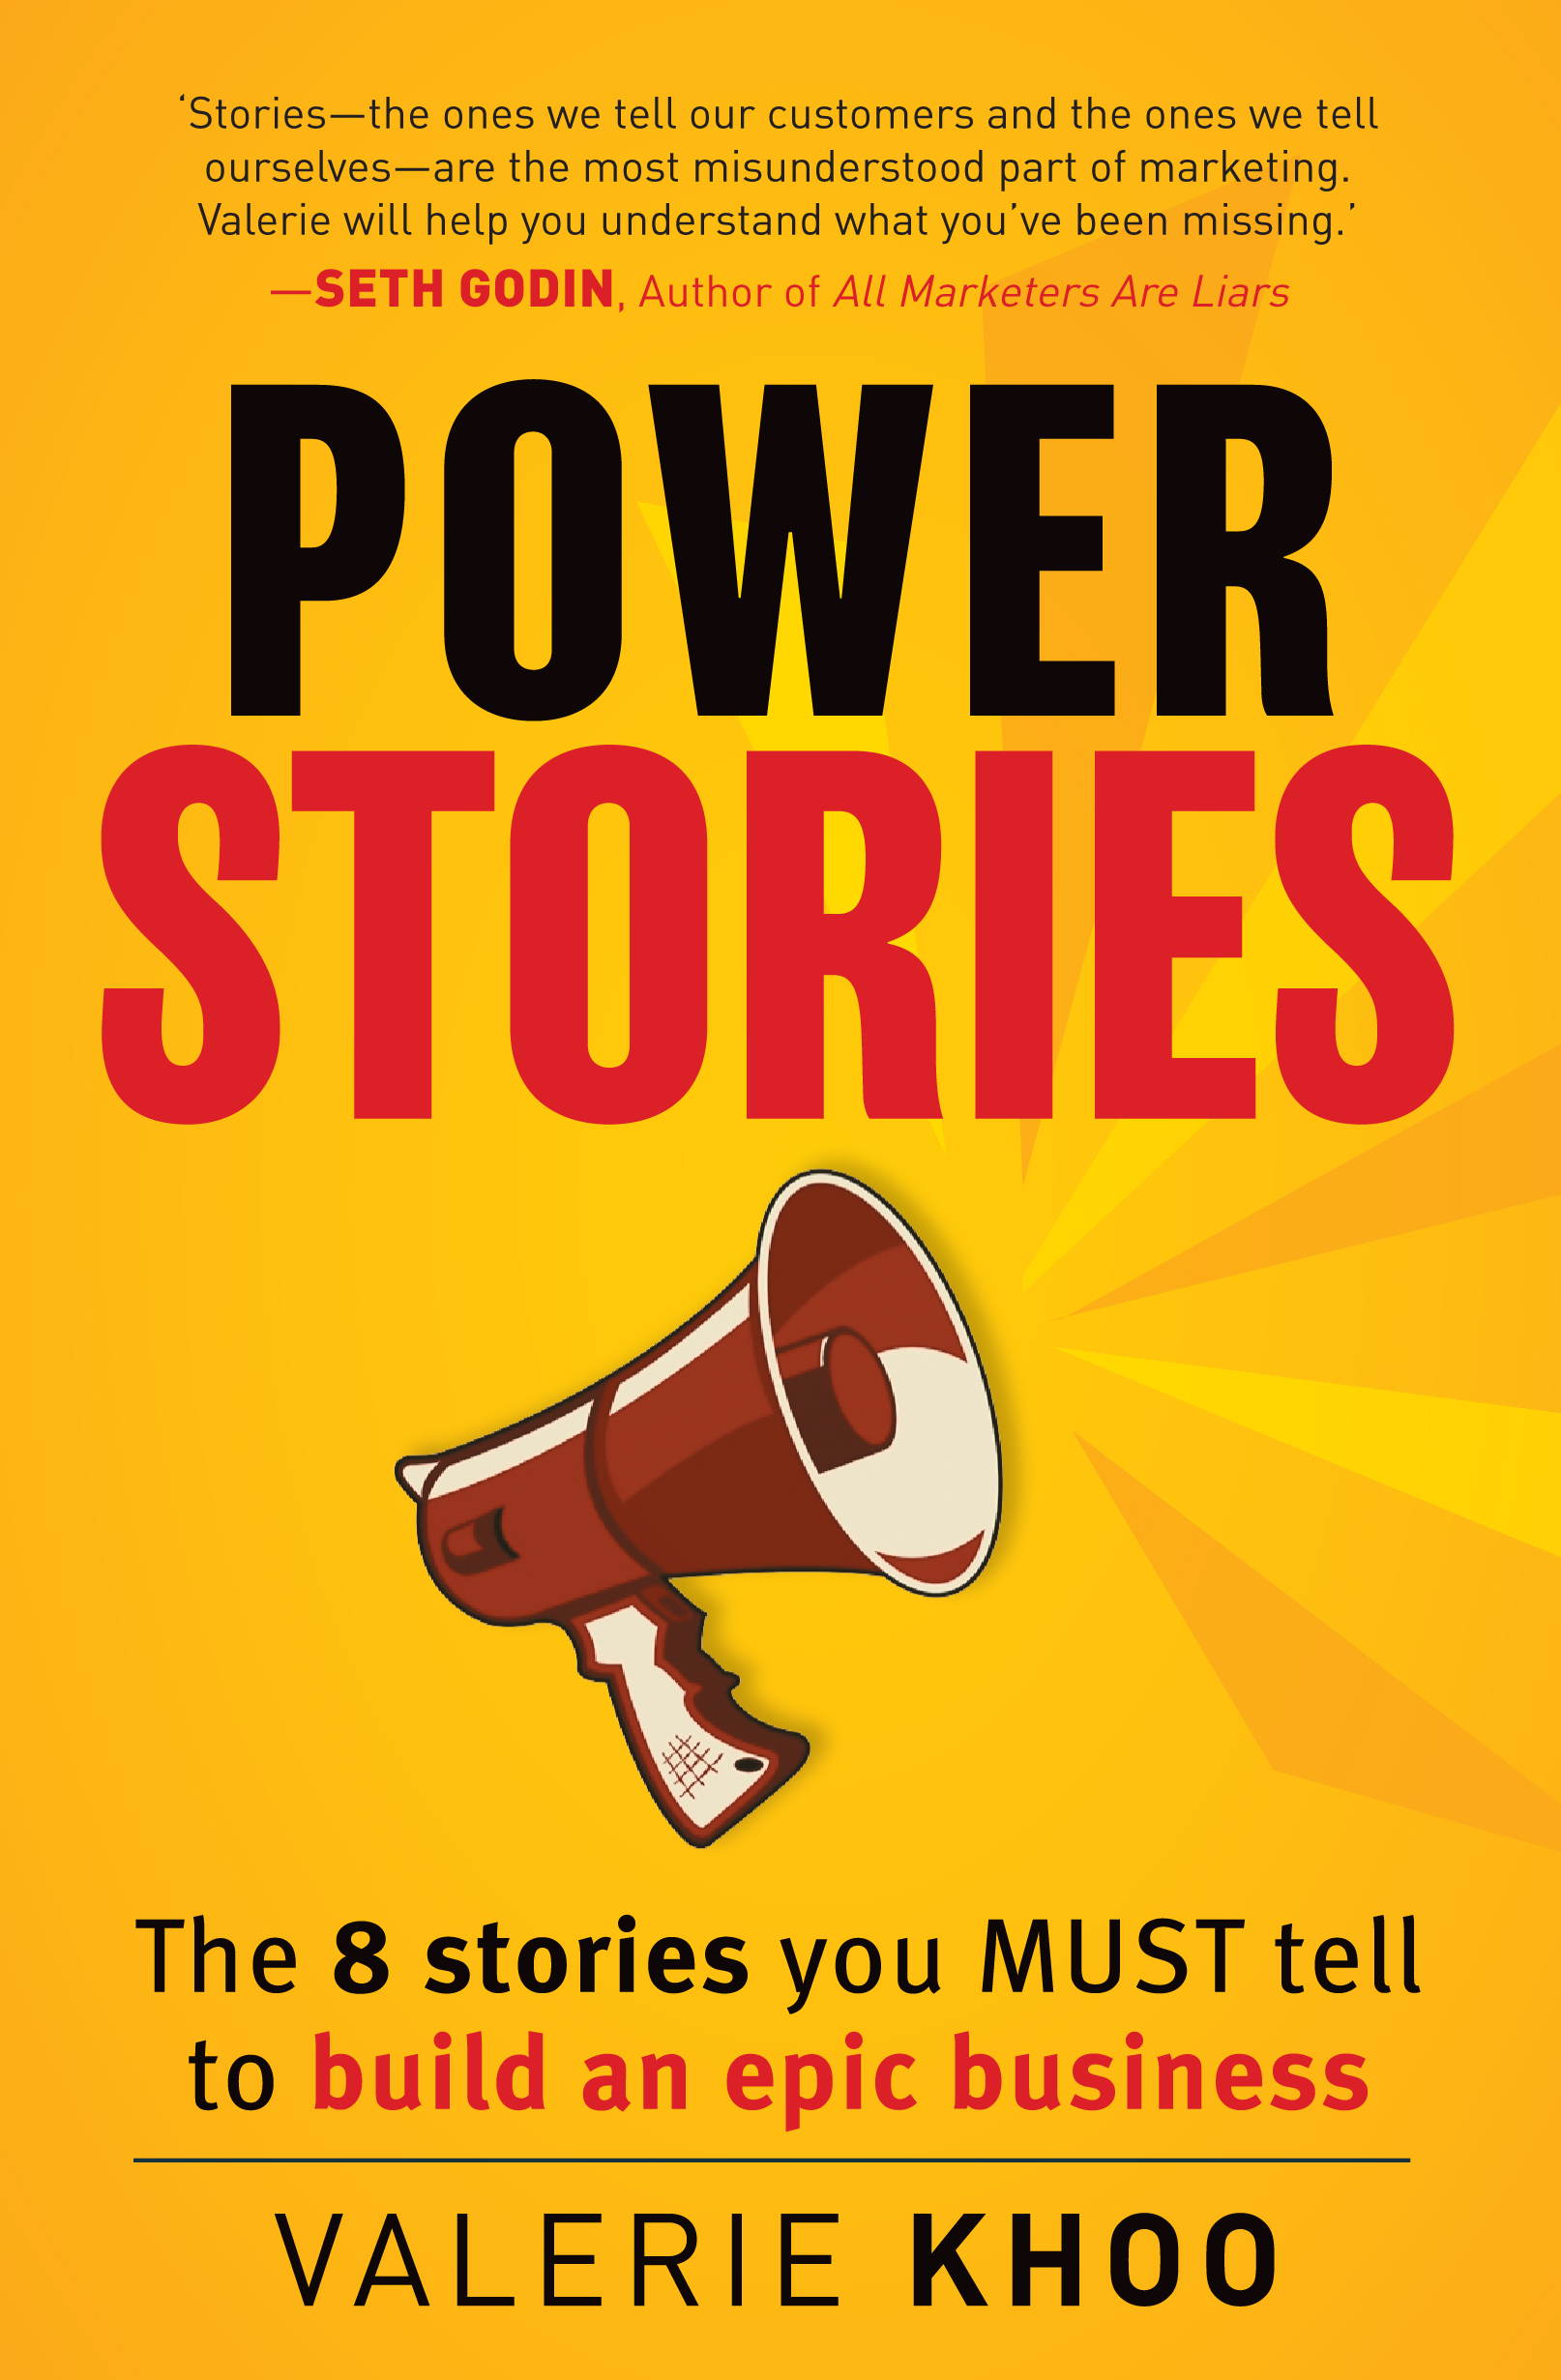 Power stories